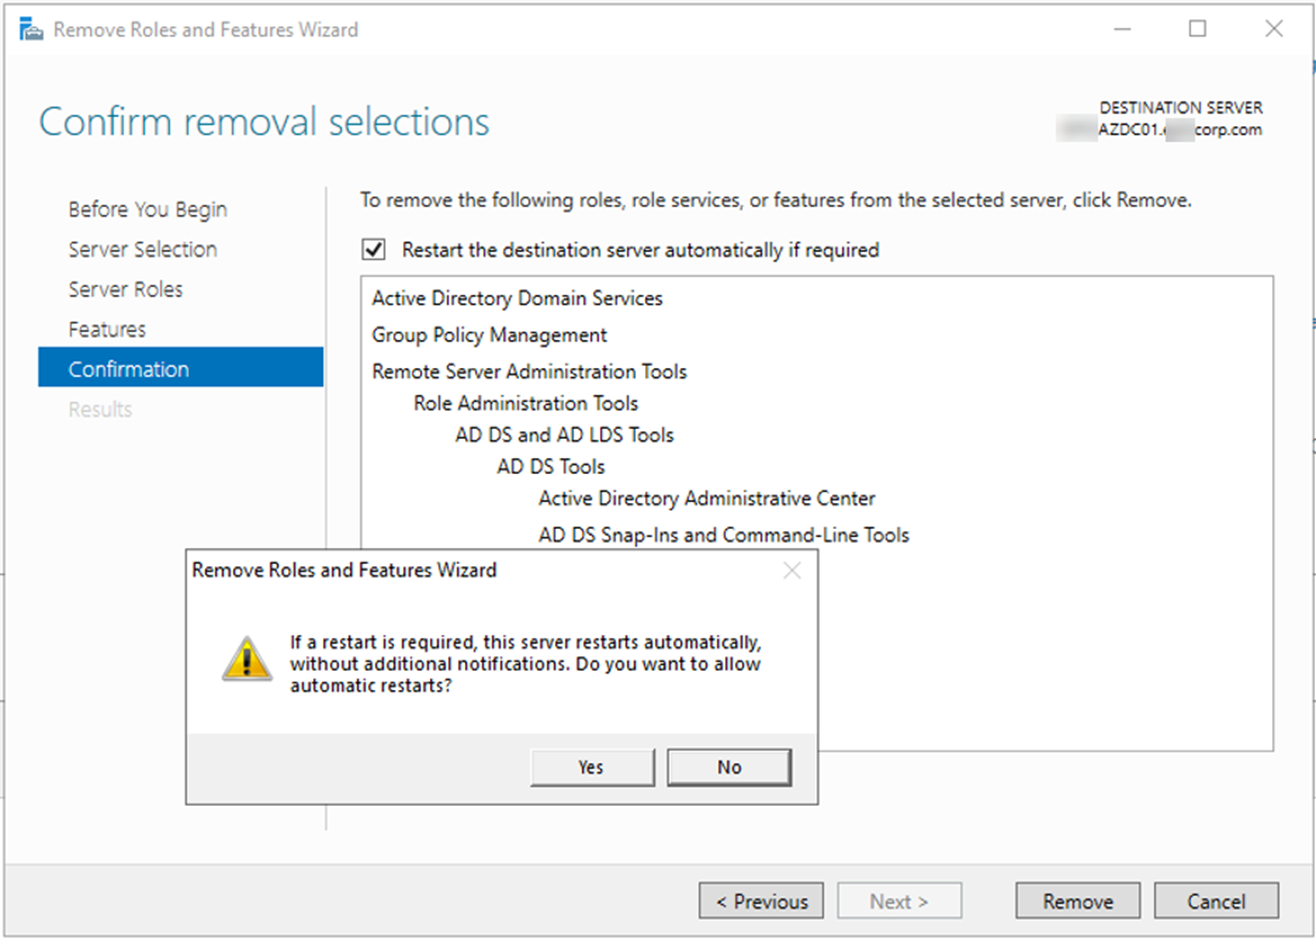 101120 0520 HowtoDemote24 - How to Demote Microsoft Windows Server 2019 Domain Controller Virtual Machine at Azure